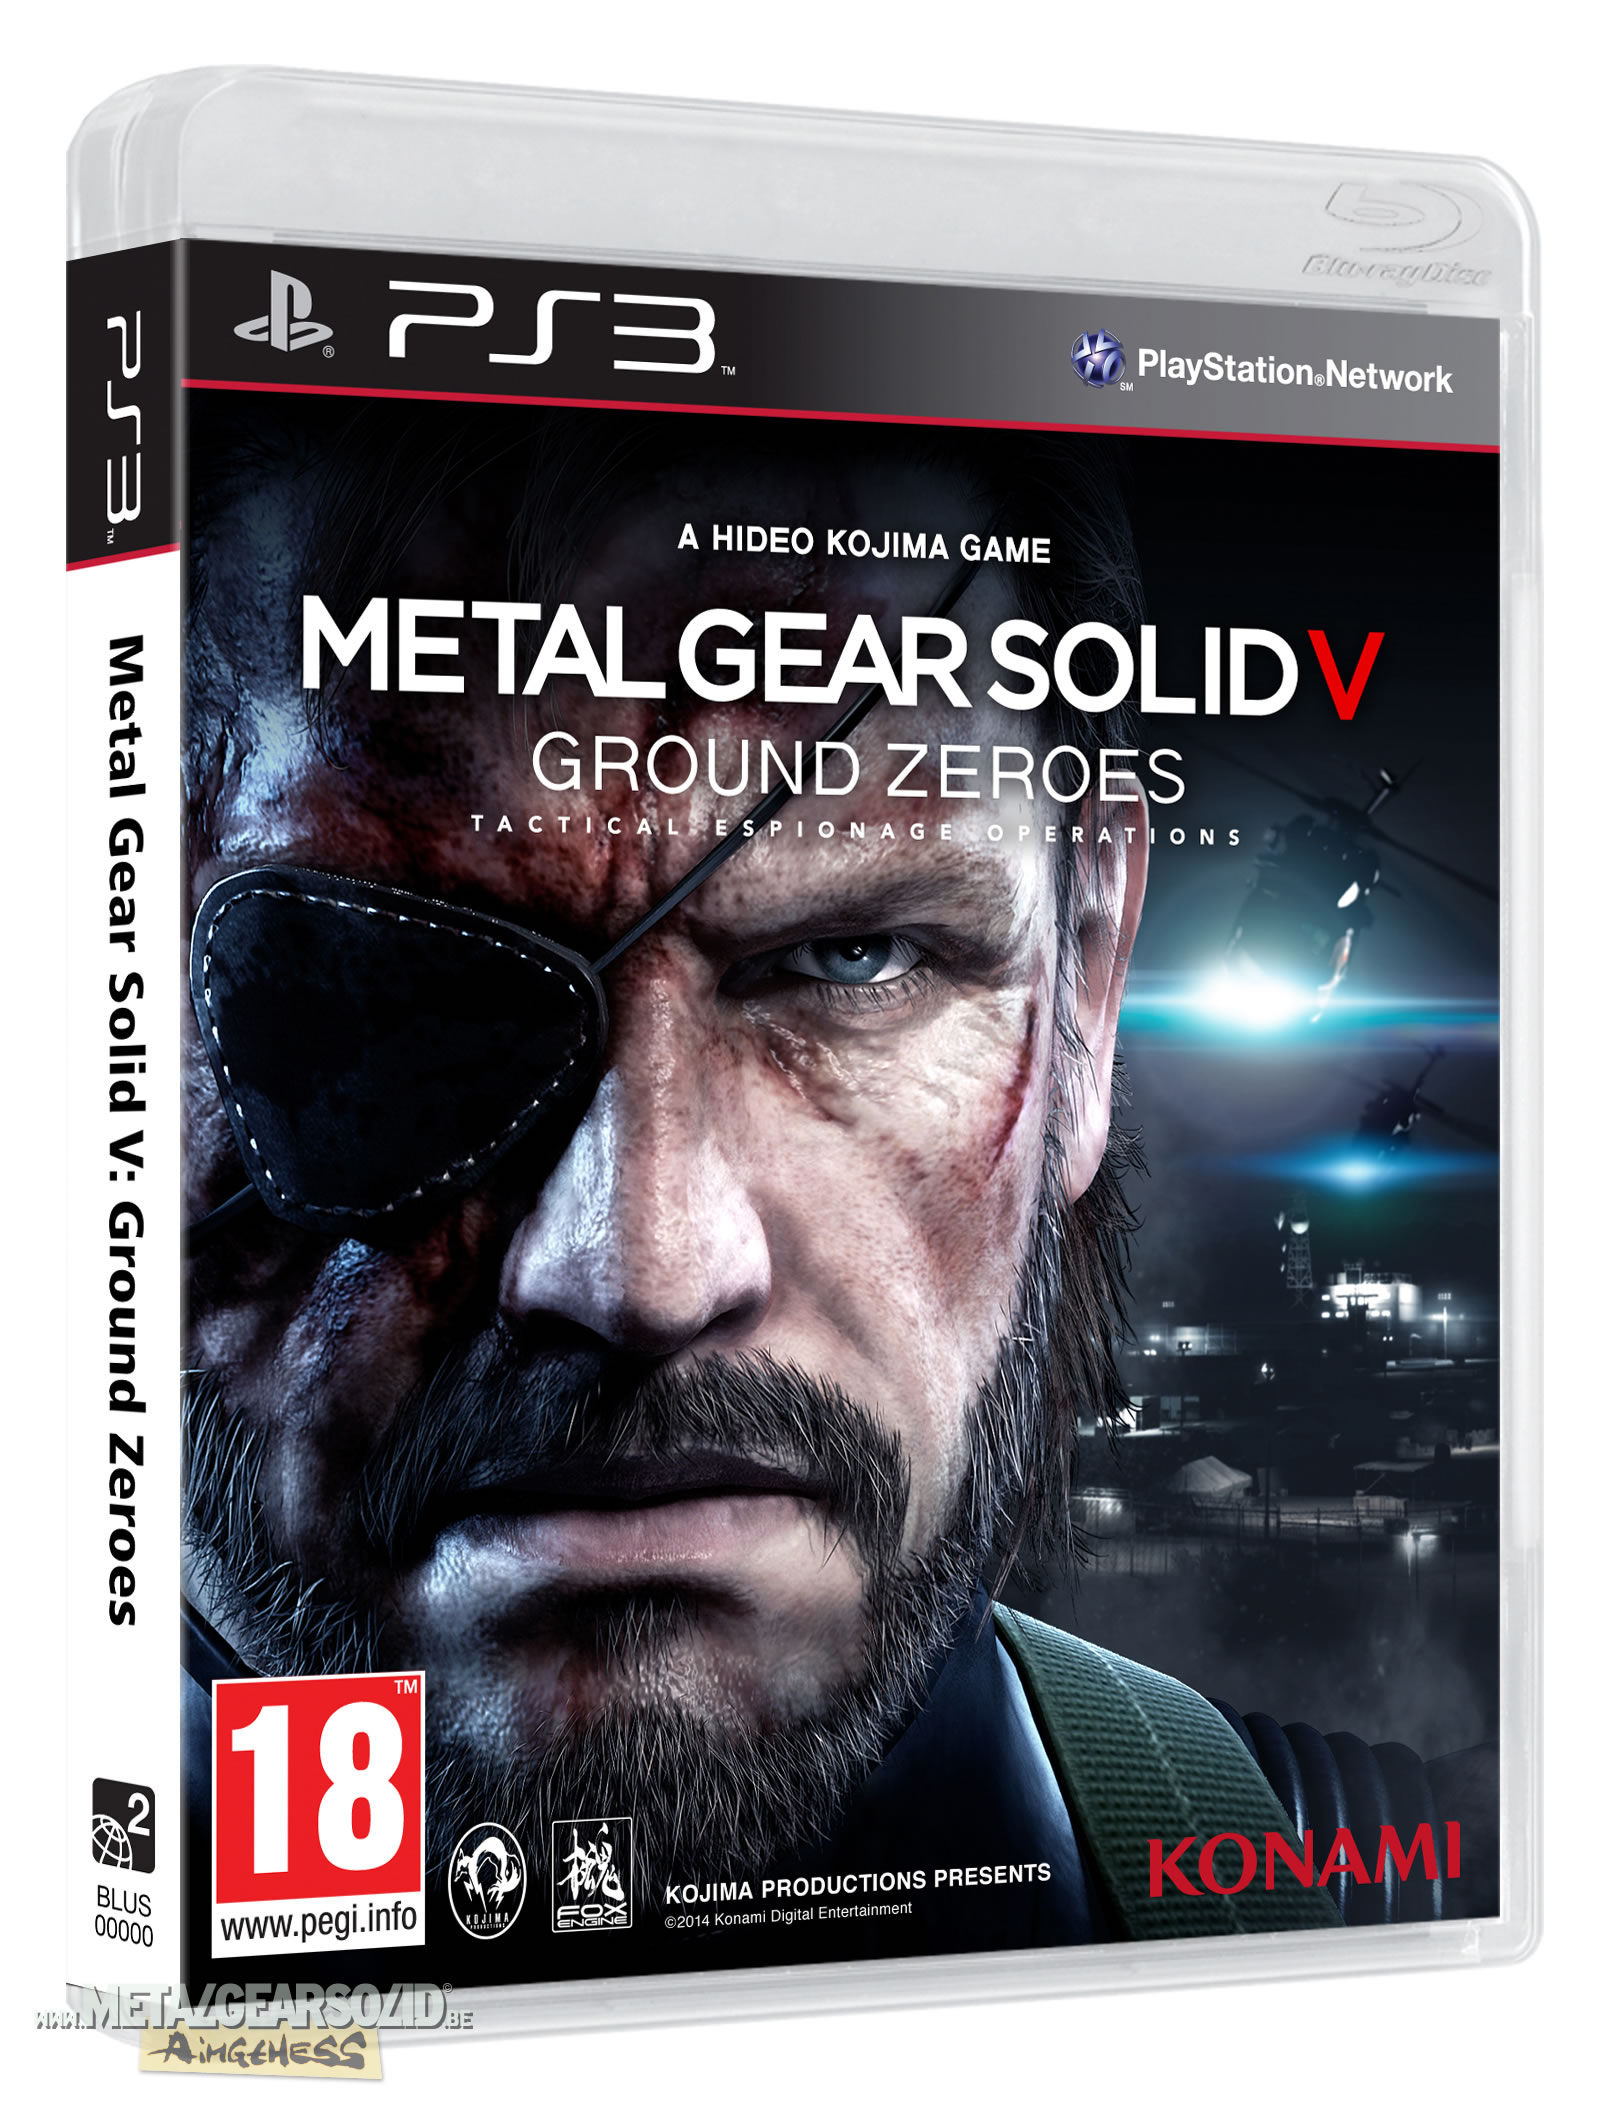 La jaquette PS3 europenne de Metal Gear Solid V : Ground Zeroes